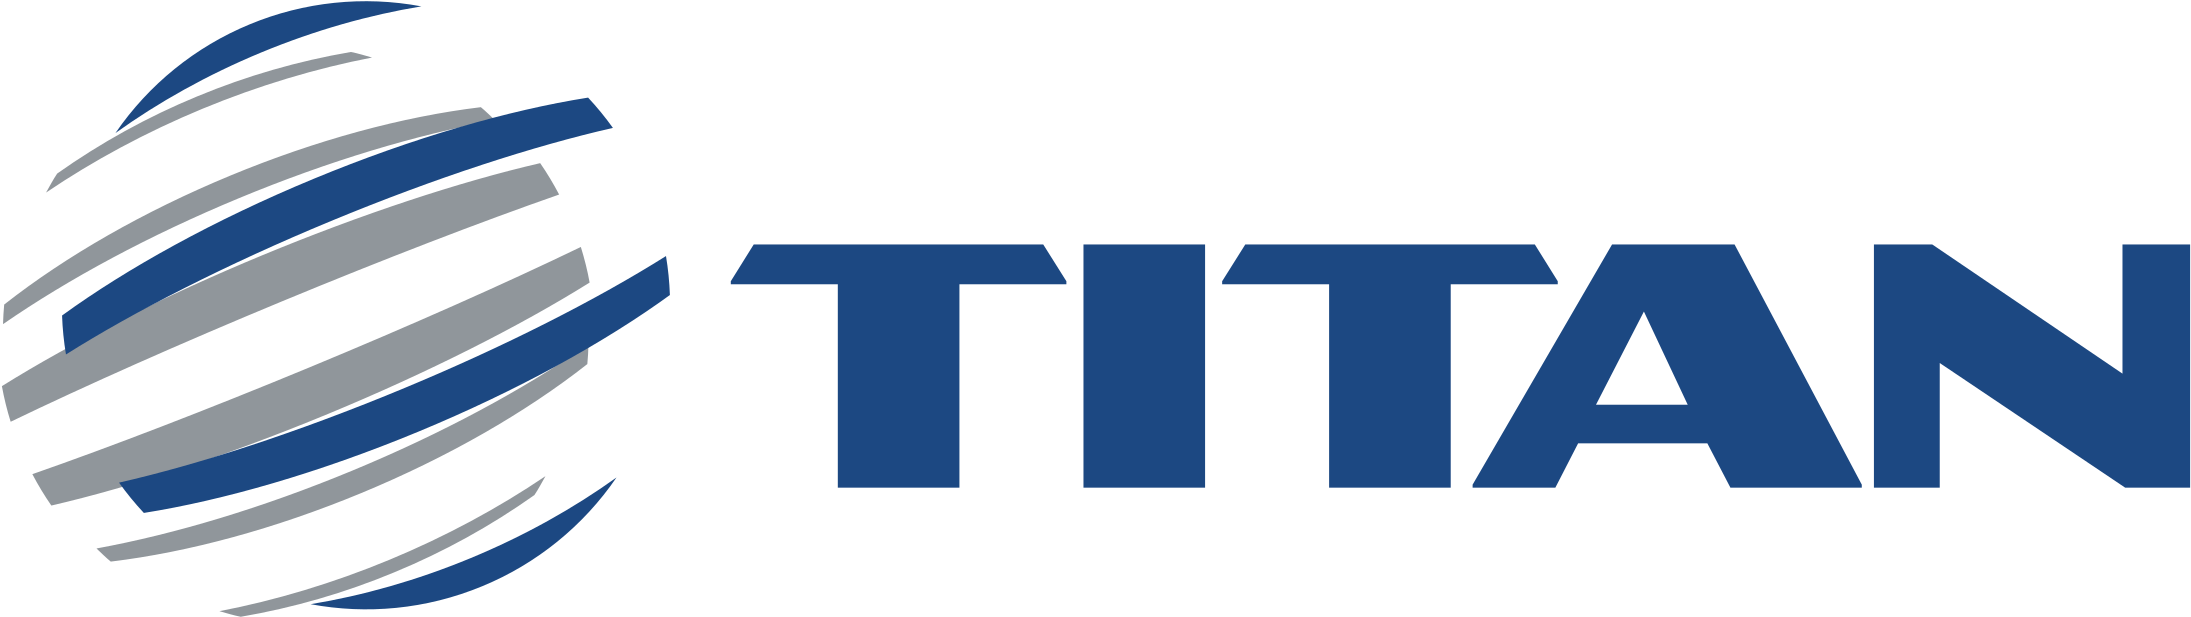 Titan Logo Png Transparent - Titan Cement (2400x2400), Png Download